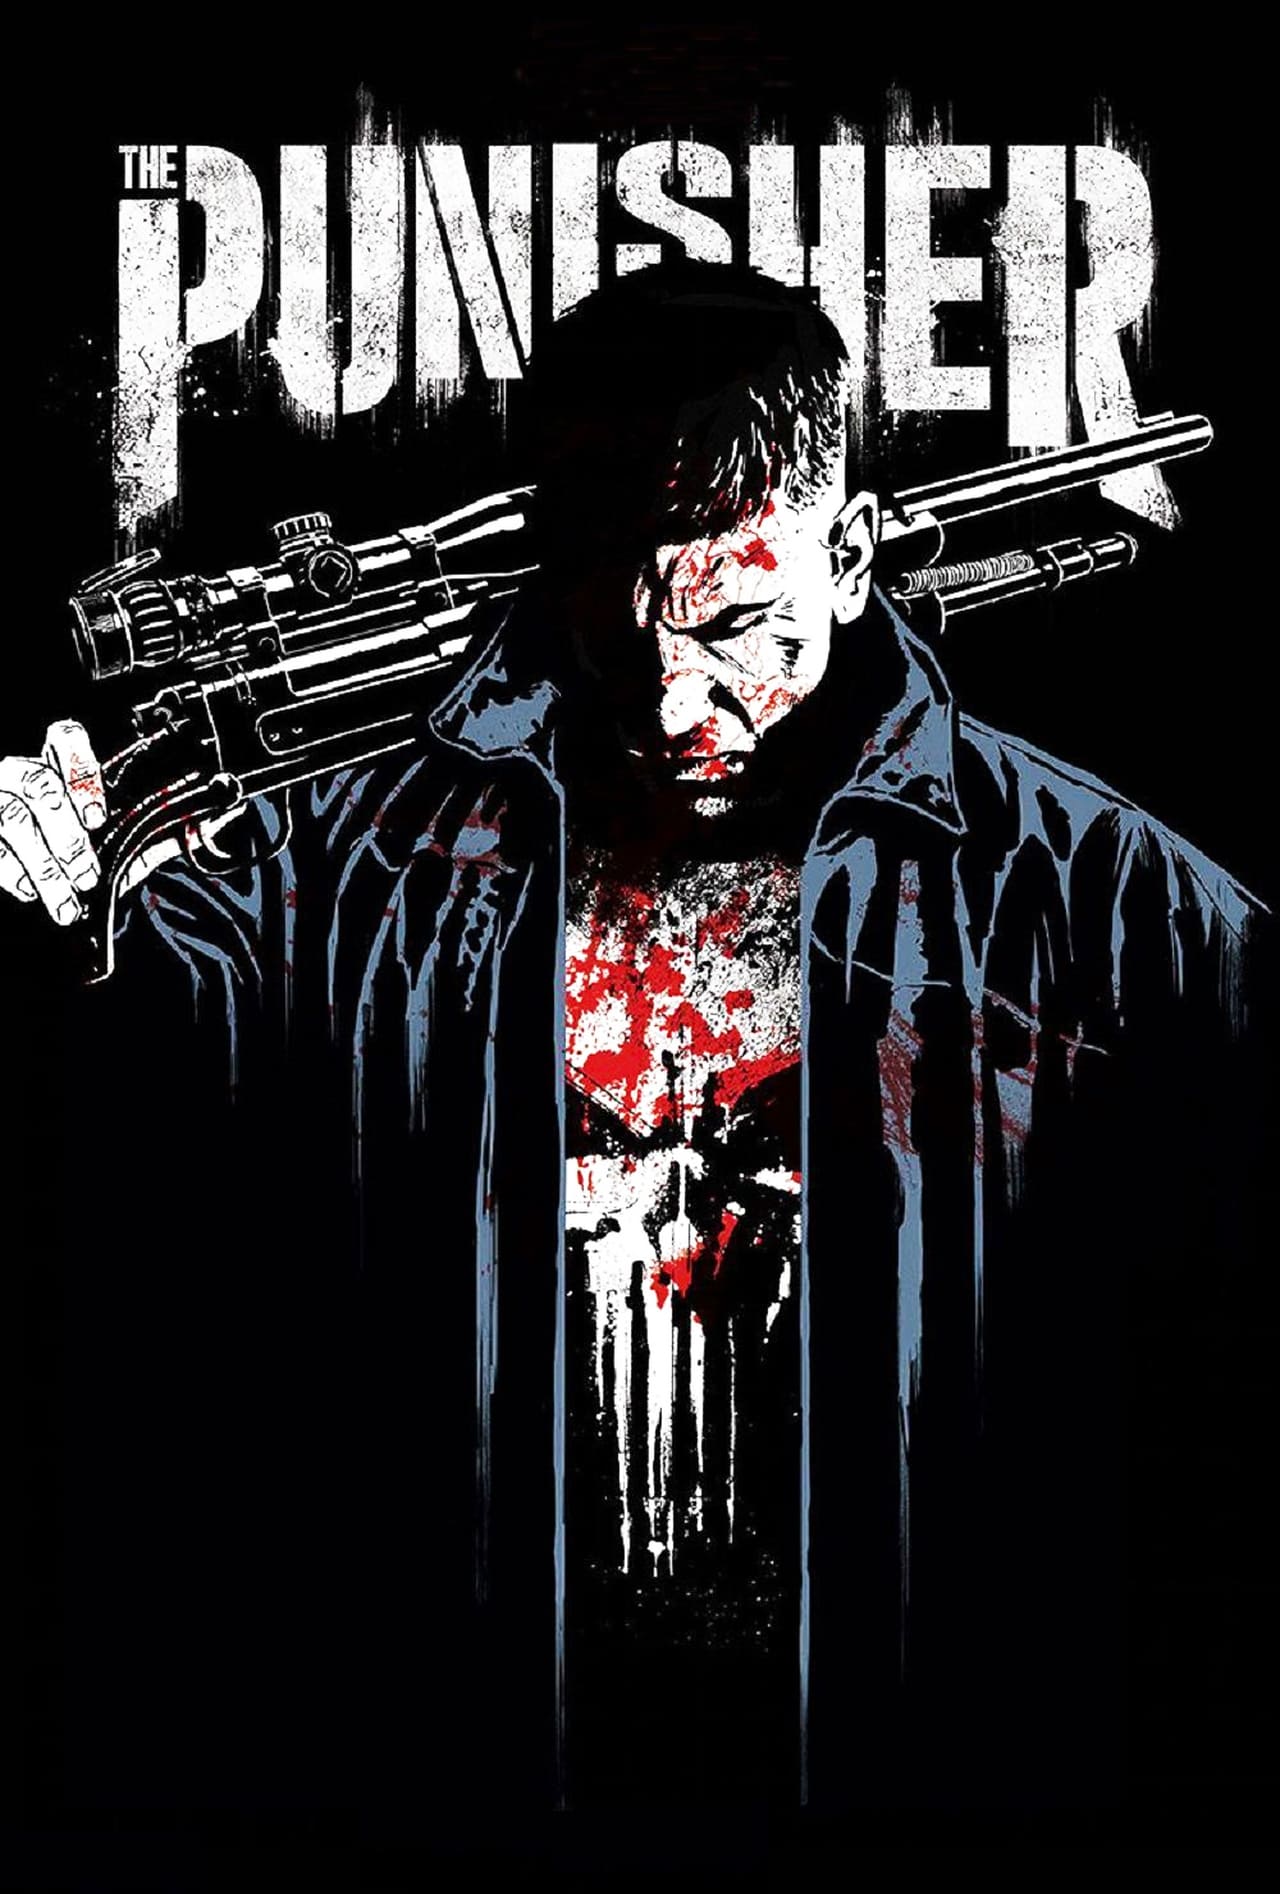 The Punisher (2017) S1 EP01&EP13 256Kbps 23.976Fps 48Khz 5.1Ch Disney+ DD+ E-AC3 Turkish Audio TAC